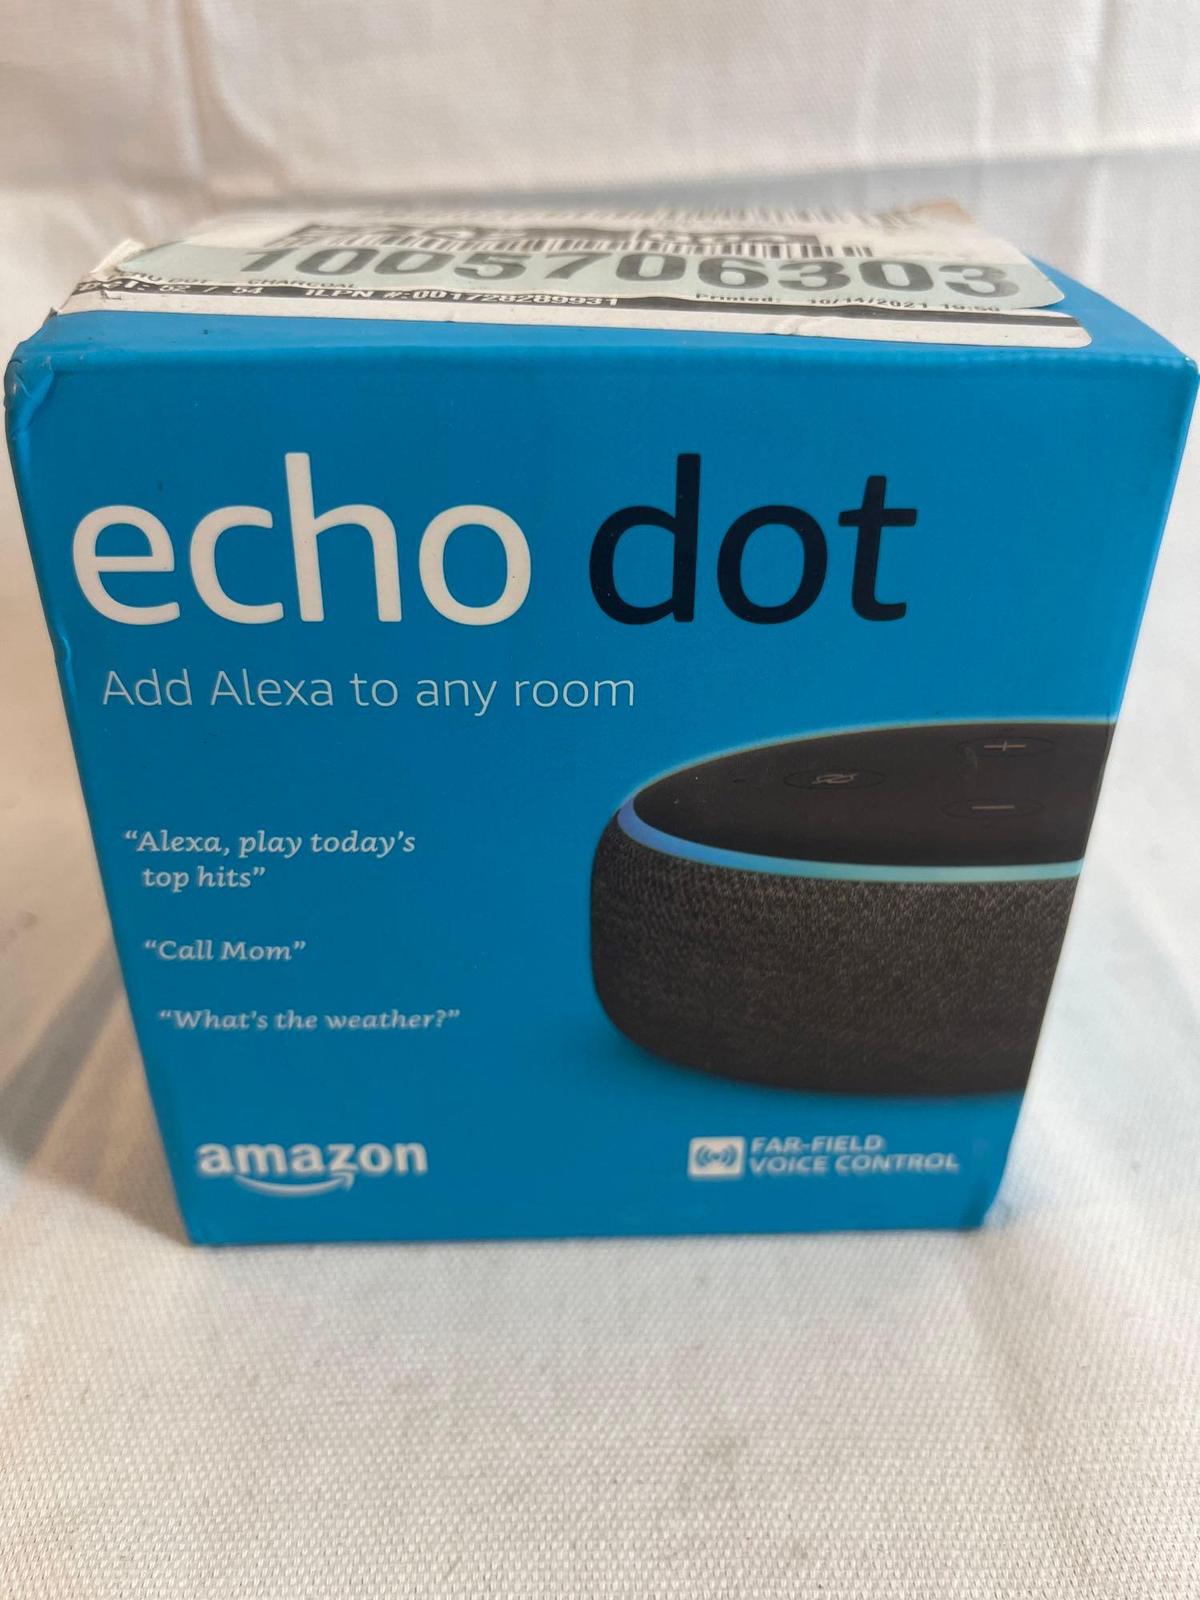 Amazon Echo Dot in box